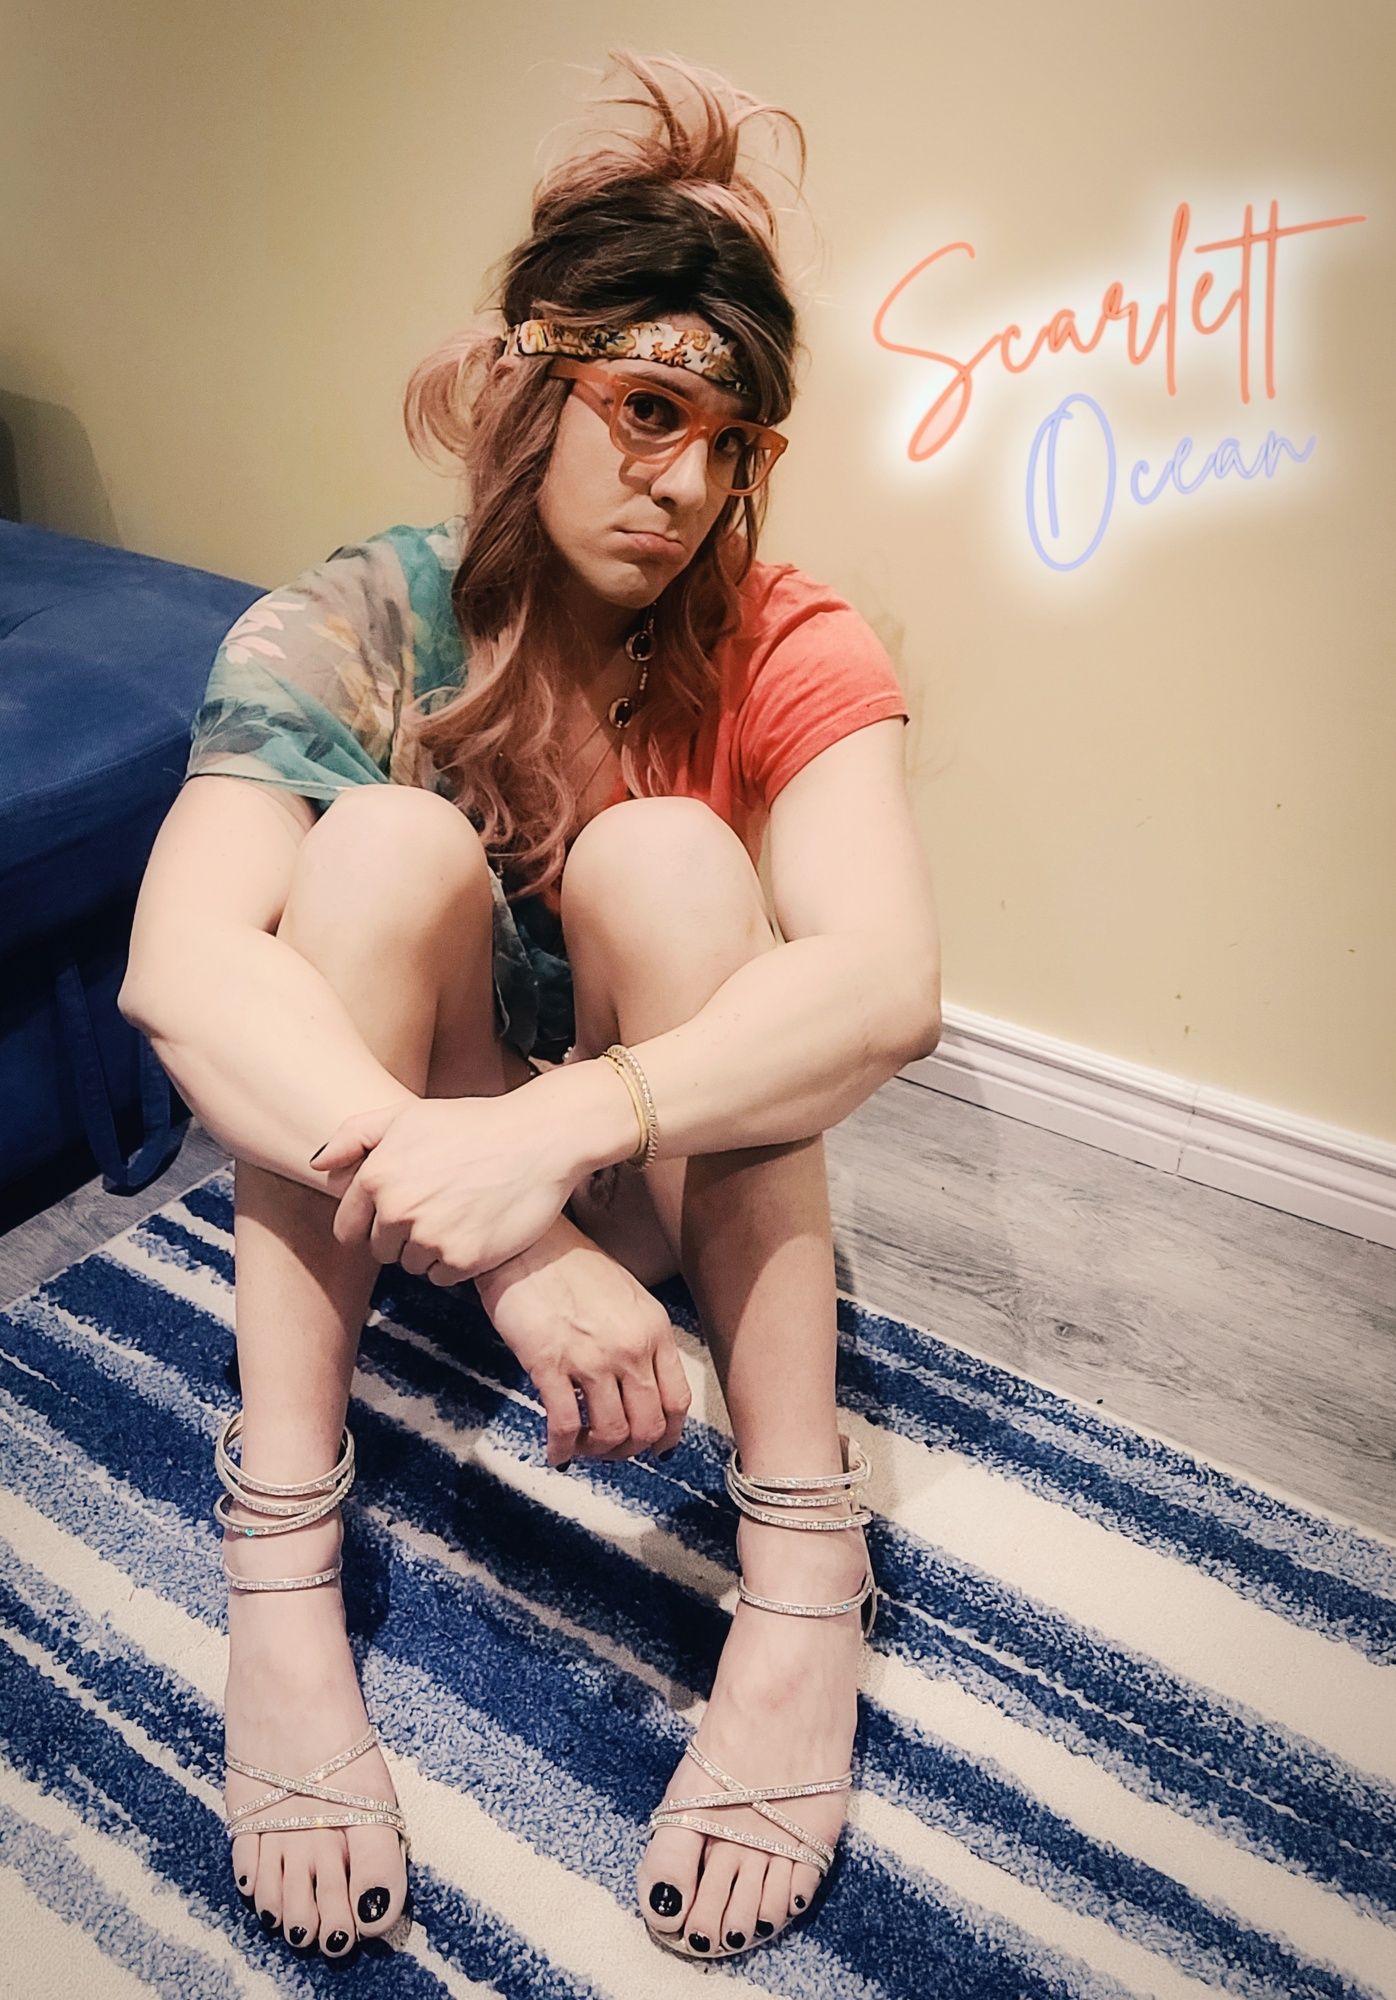 Scarlett Ocean - LIVE in COLOR 2 #42